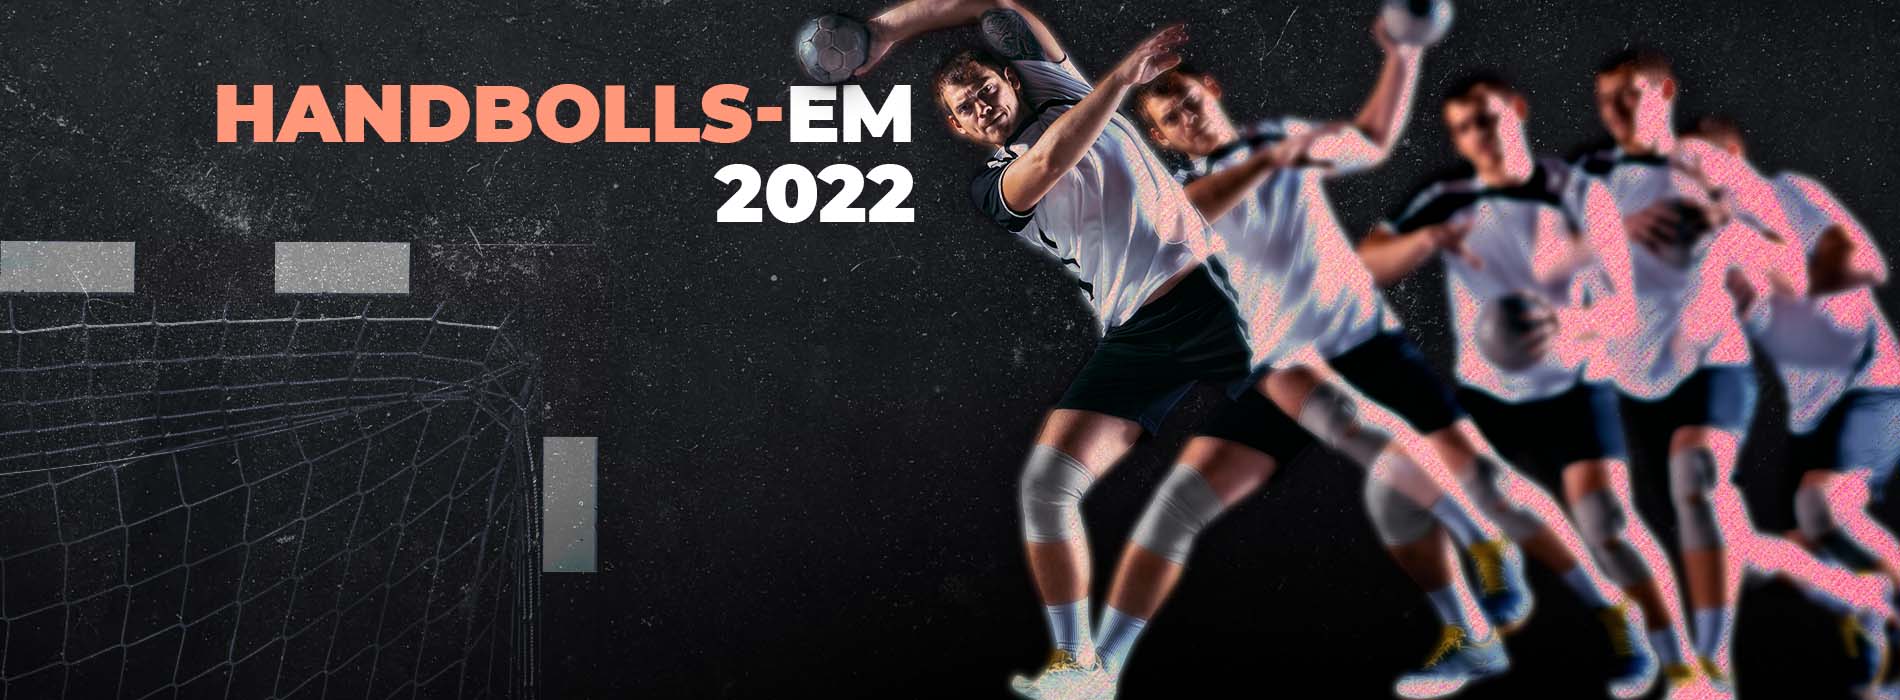 Handbolls EM 2022 odds